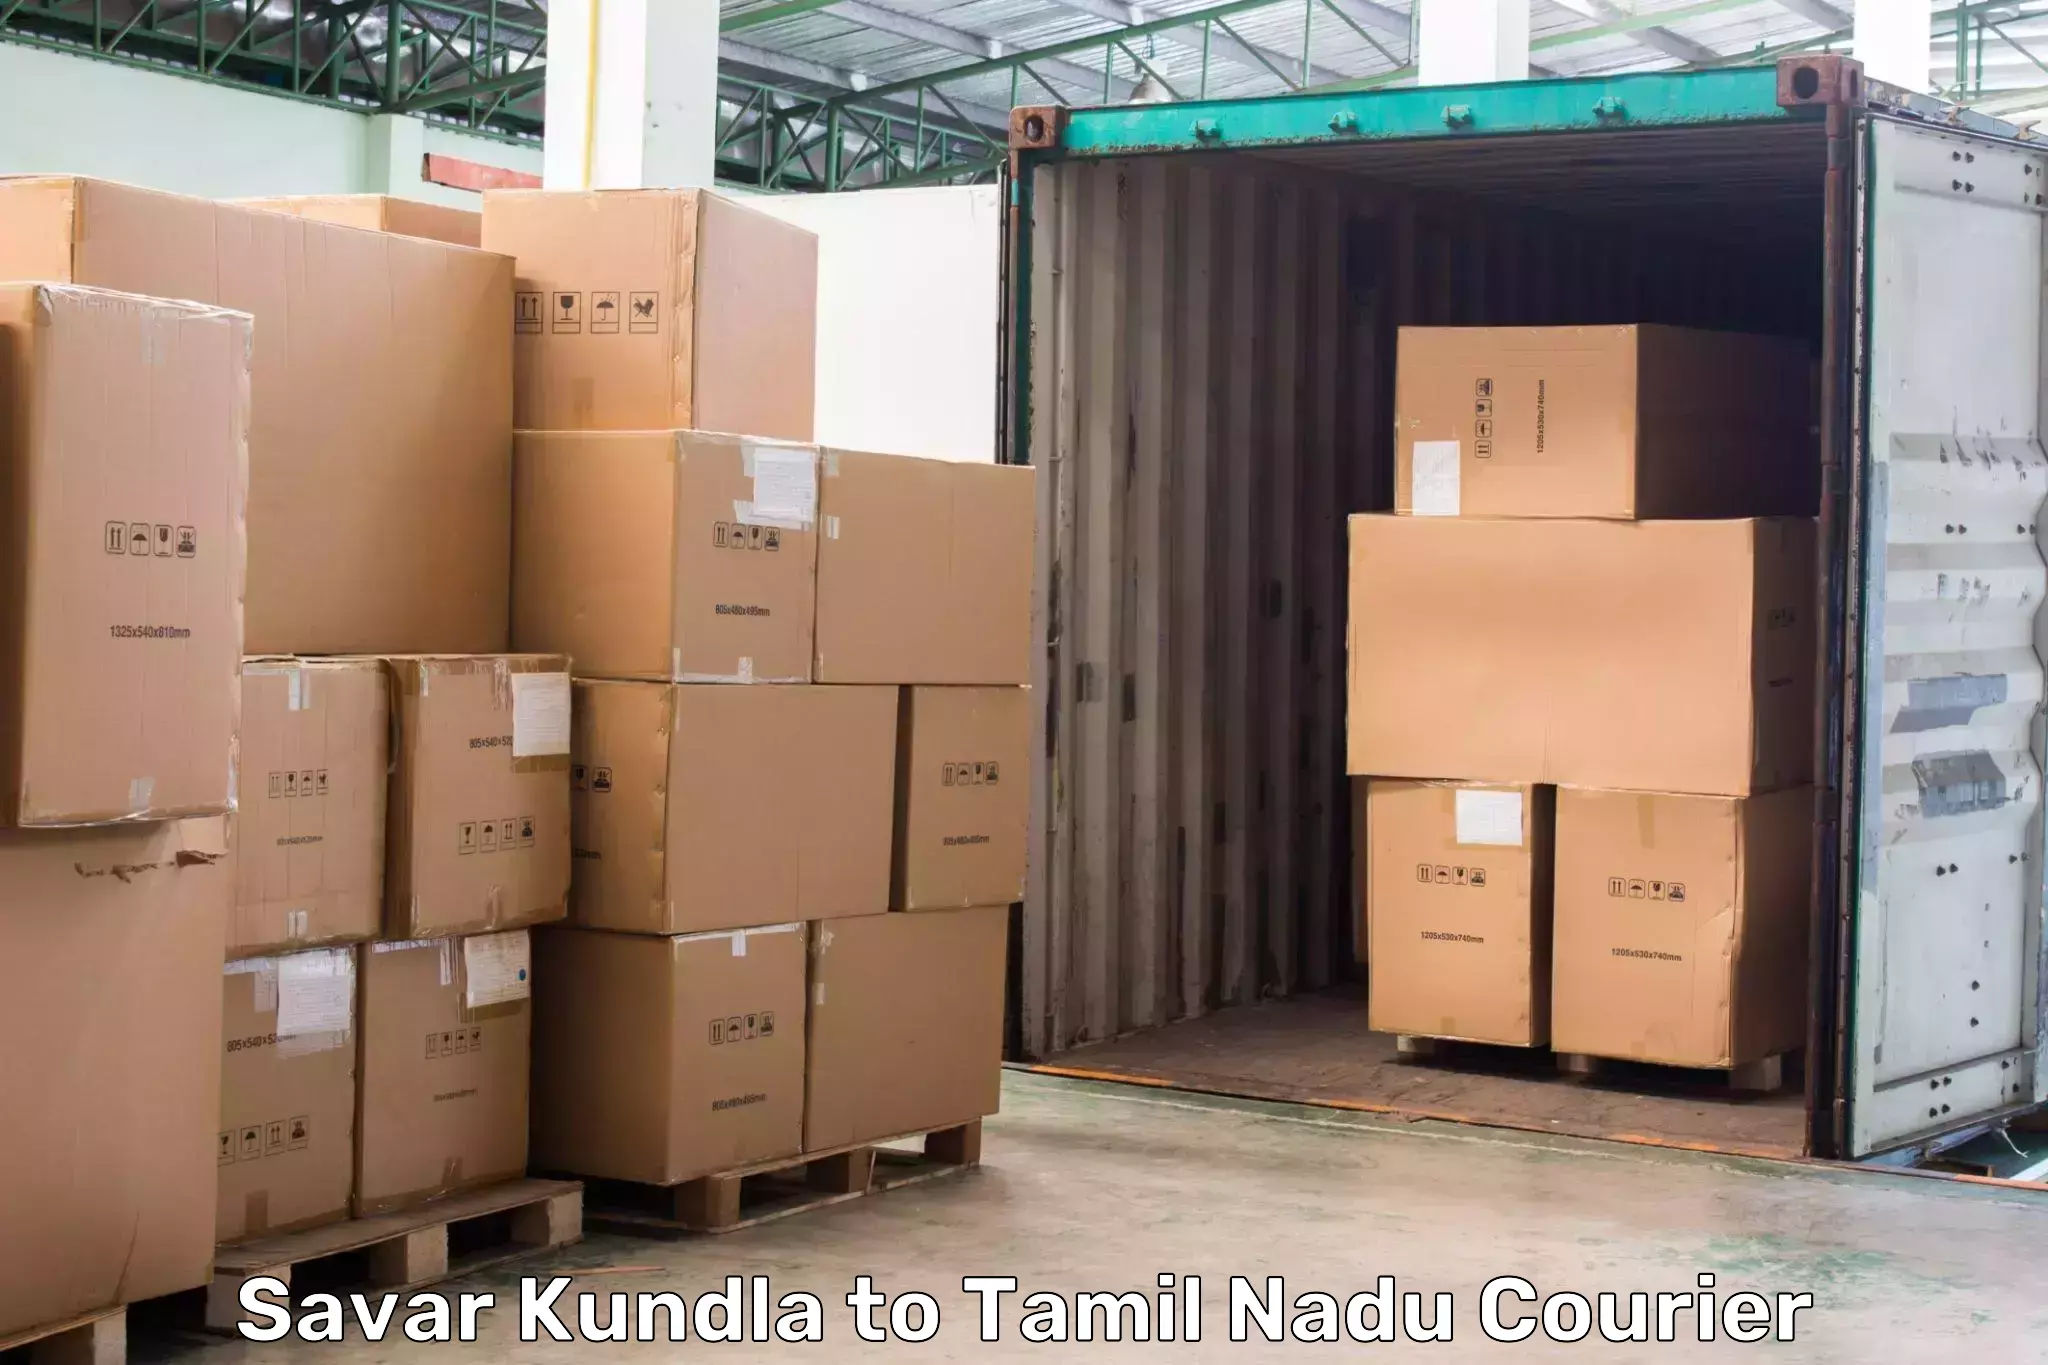 Express delivery capabilities Savar Kundla to Devakottai